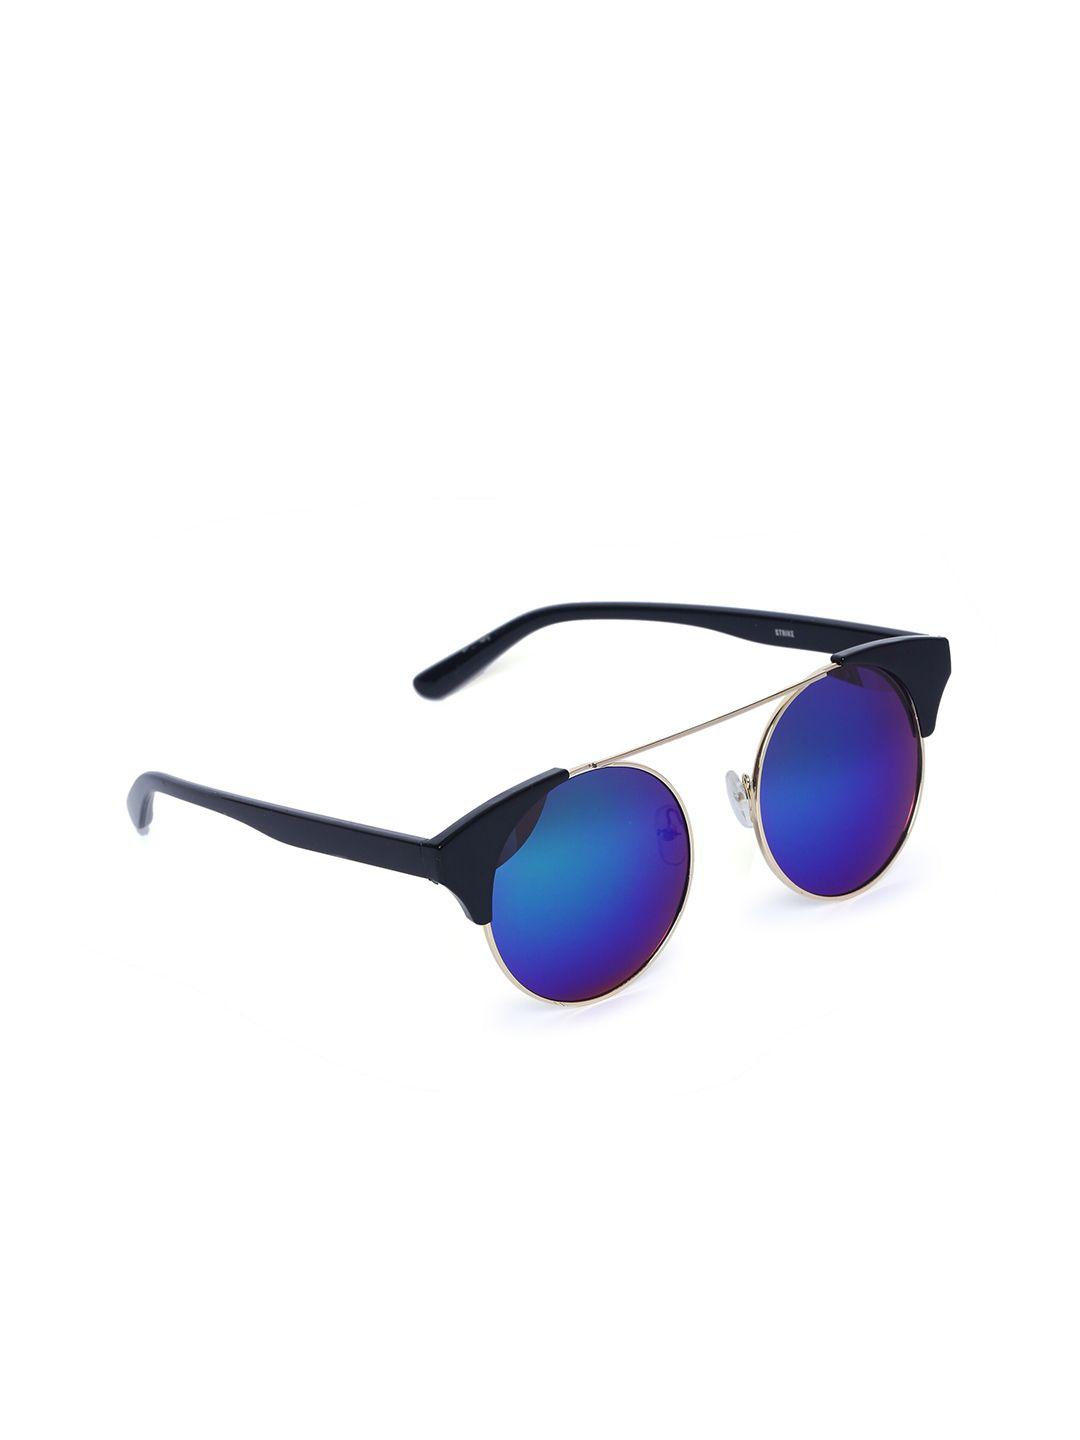 swiss design unisex blue lens & black round sunglasses sdsg21-1955206